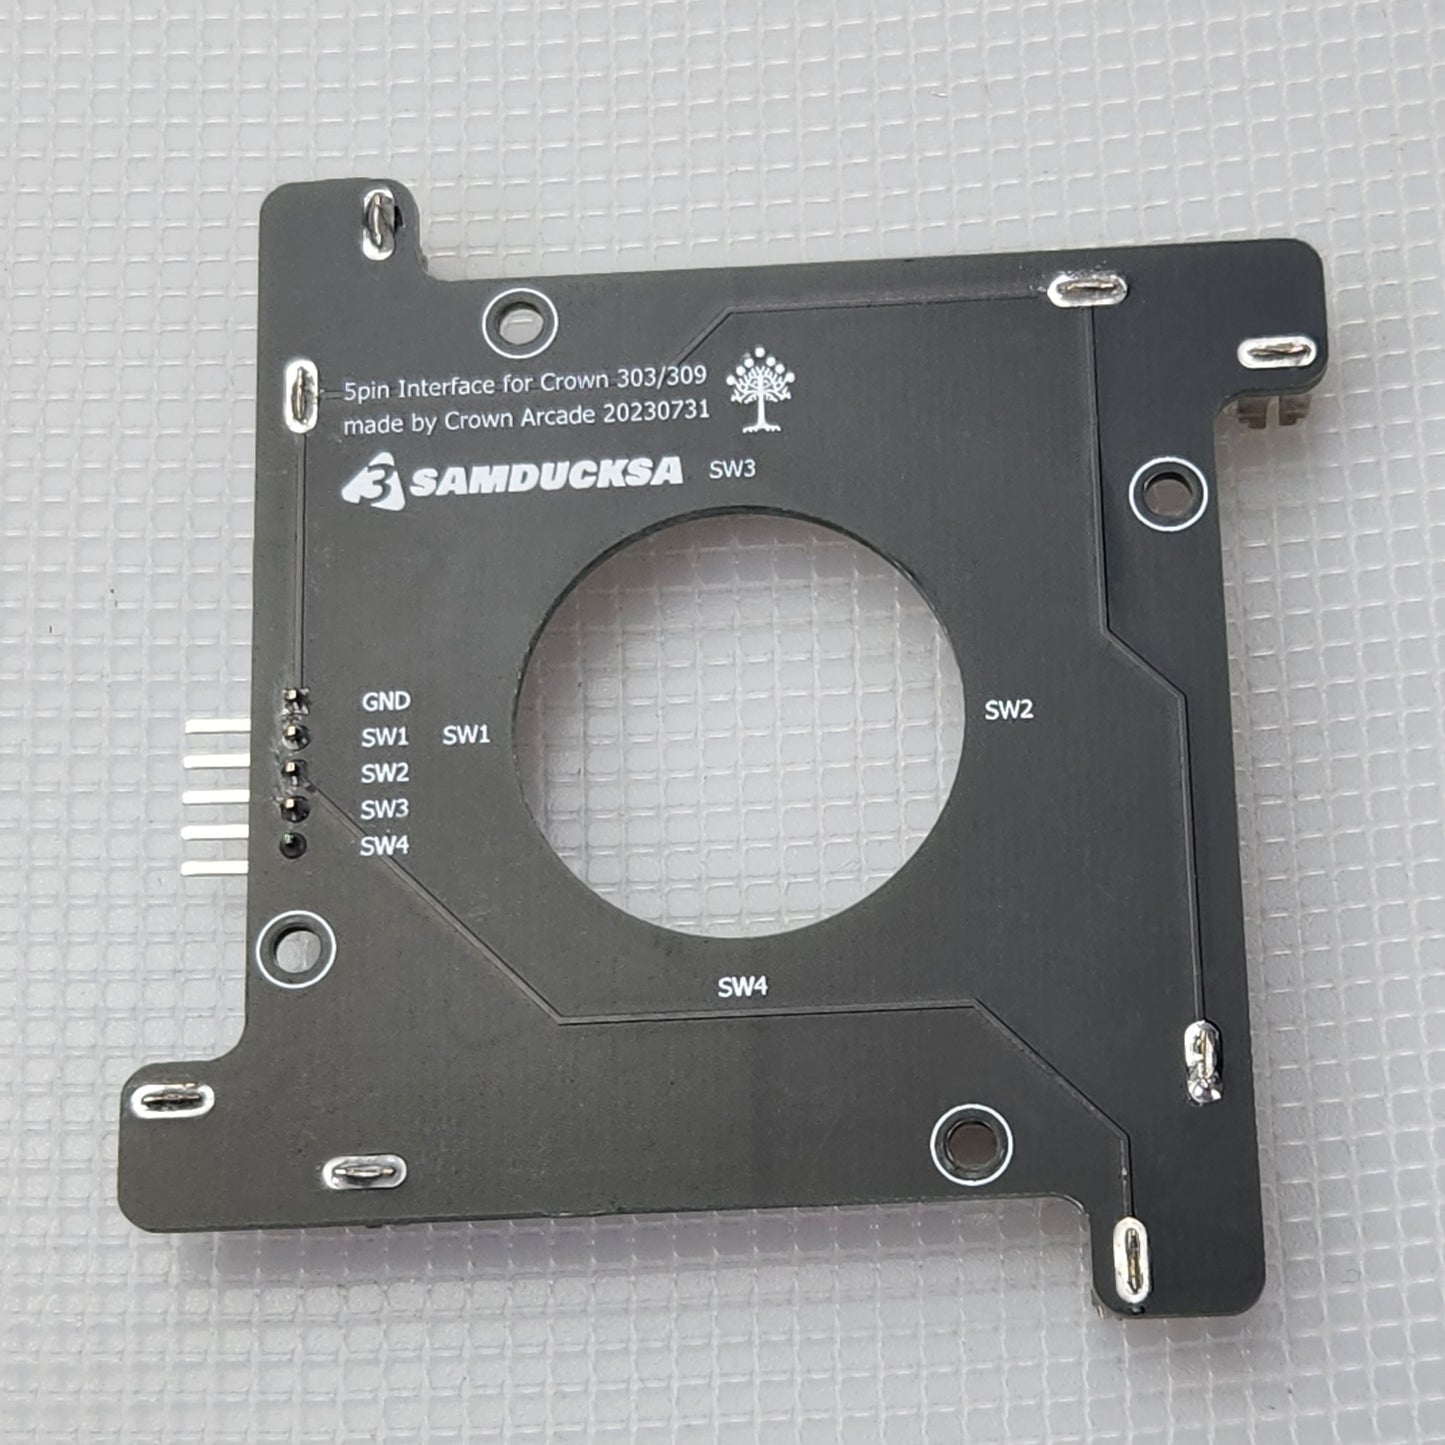 Samducksa (aka. Crown) 5-pin interface PCB